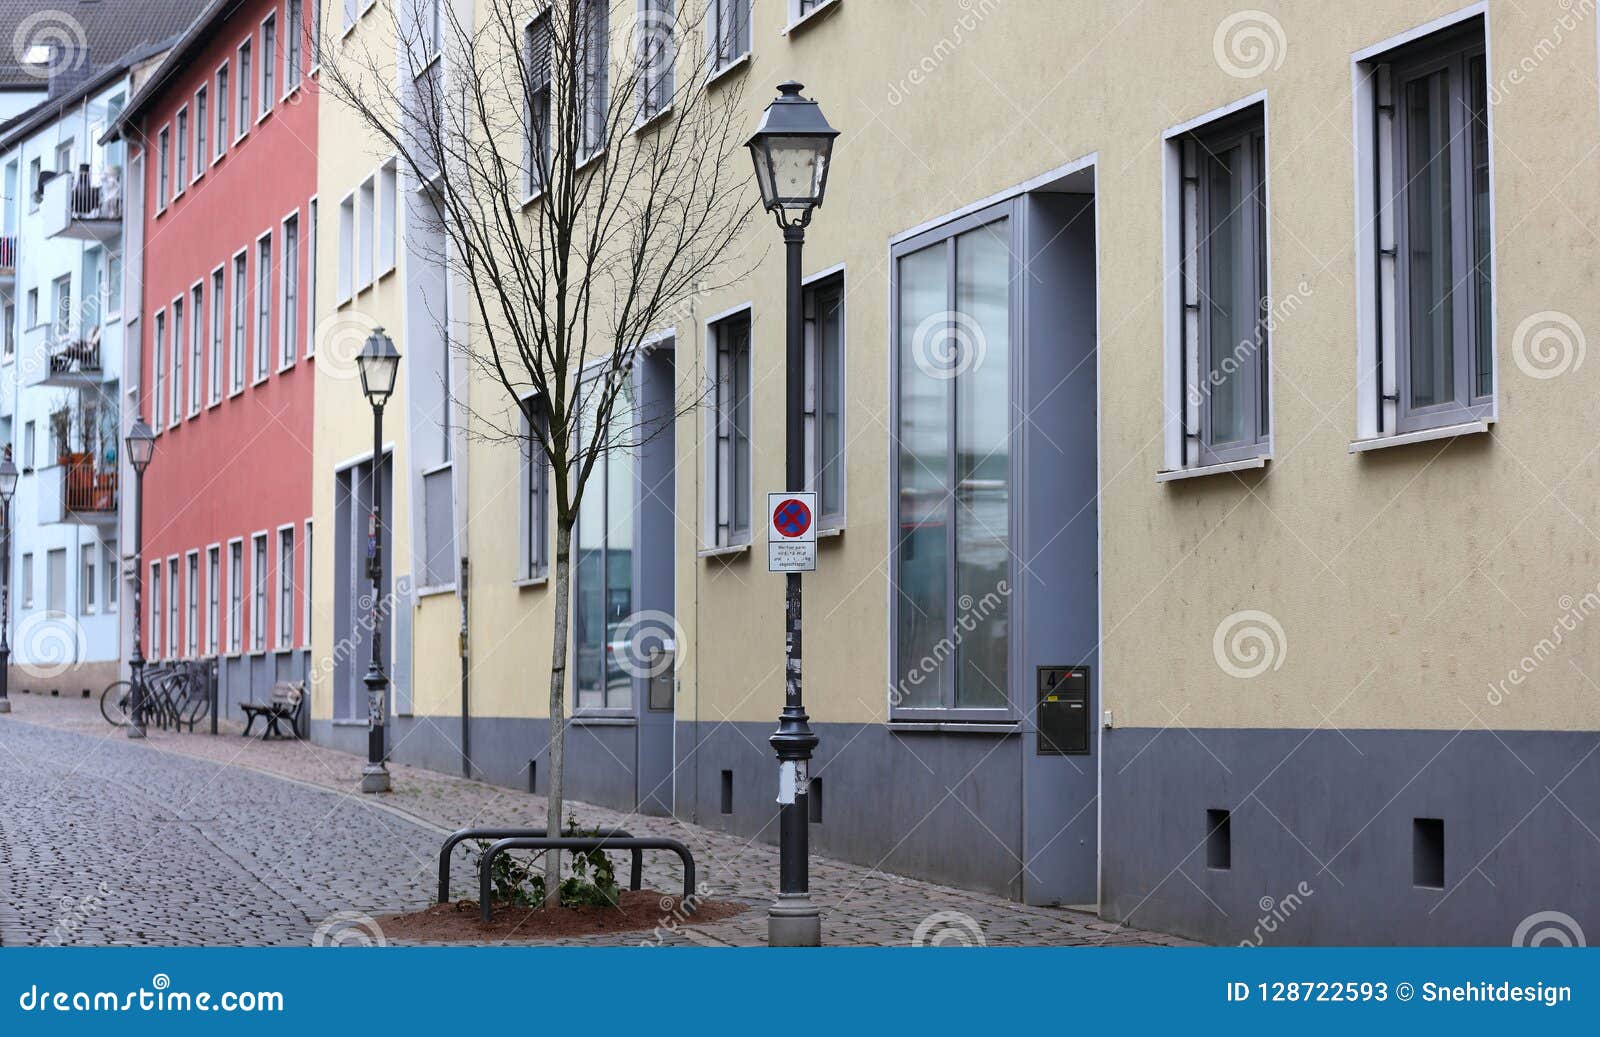 Lamp Posts  And Colorful Buildings In Frankfurt  Street  